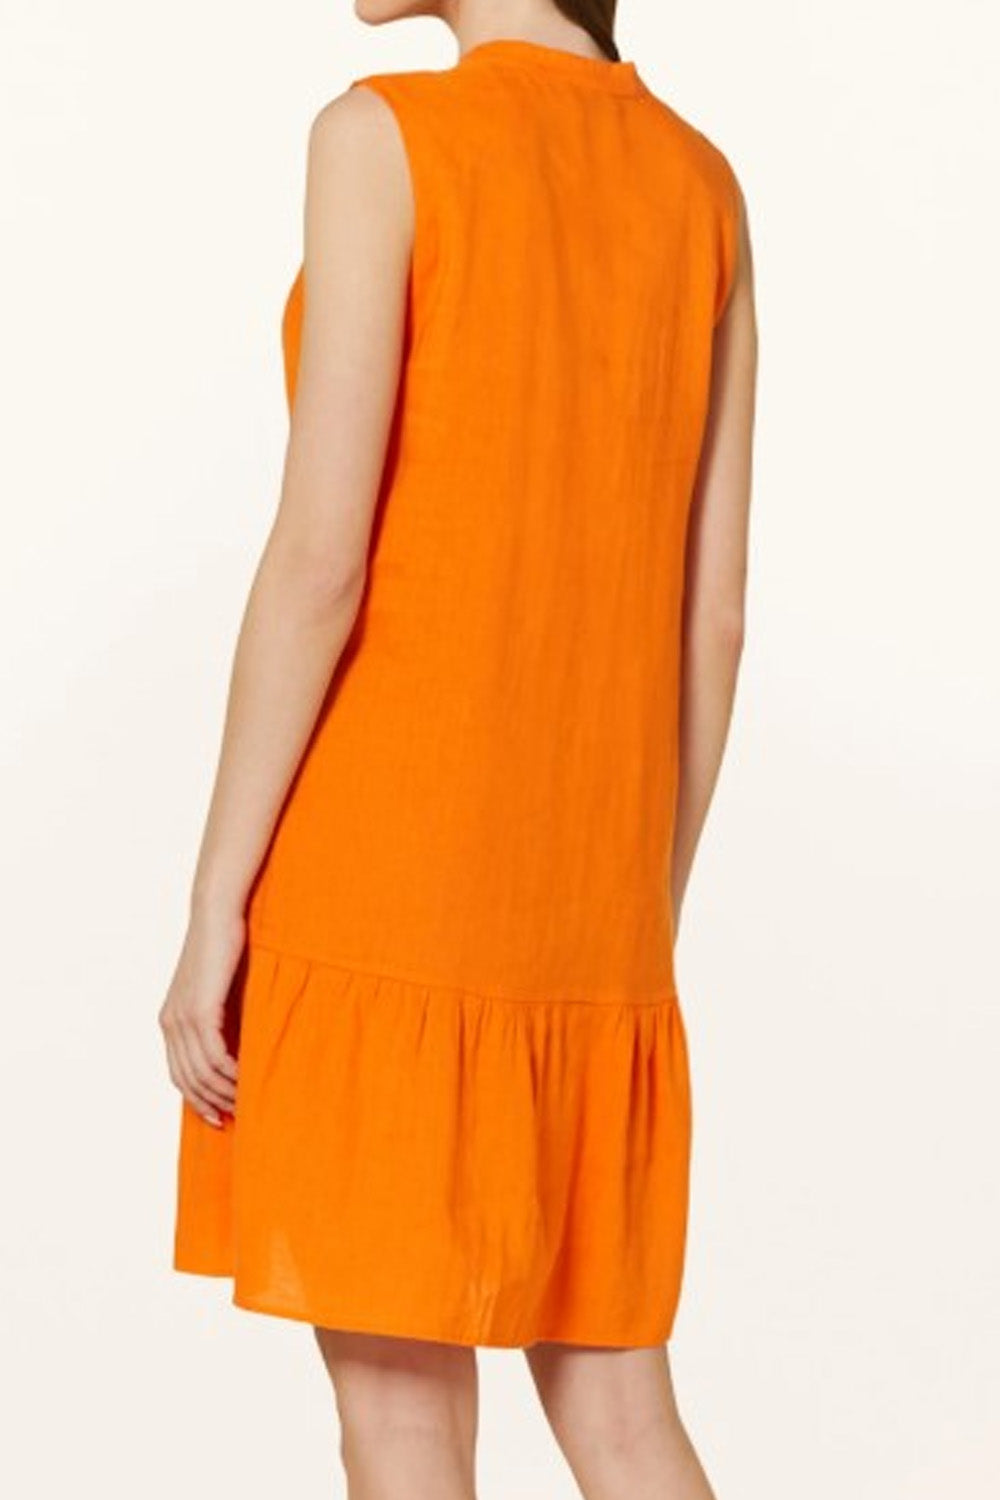 Pastoral Orange Dress